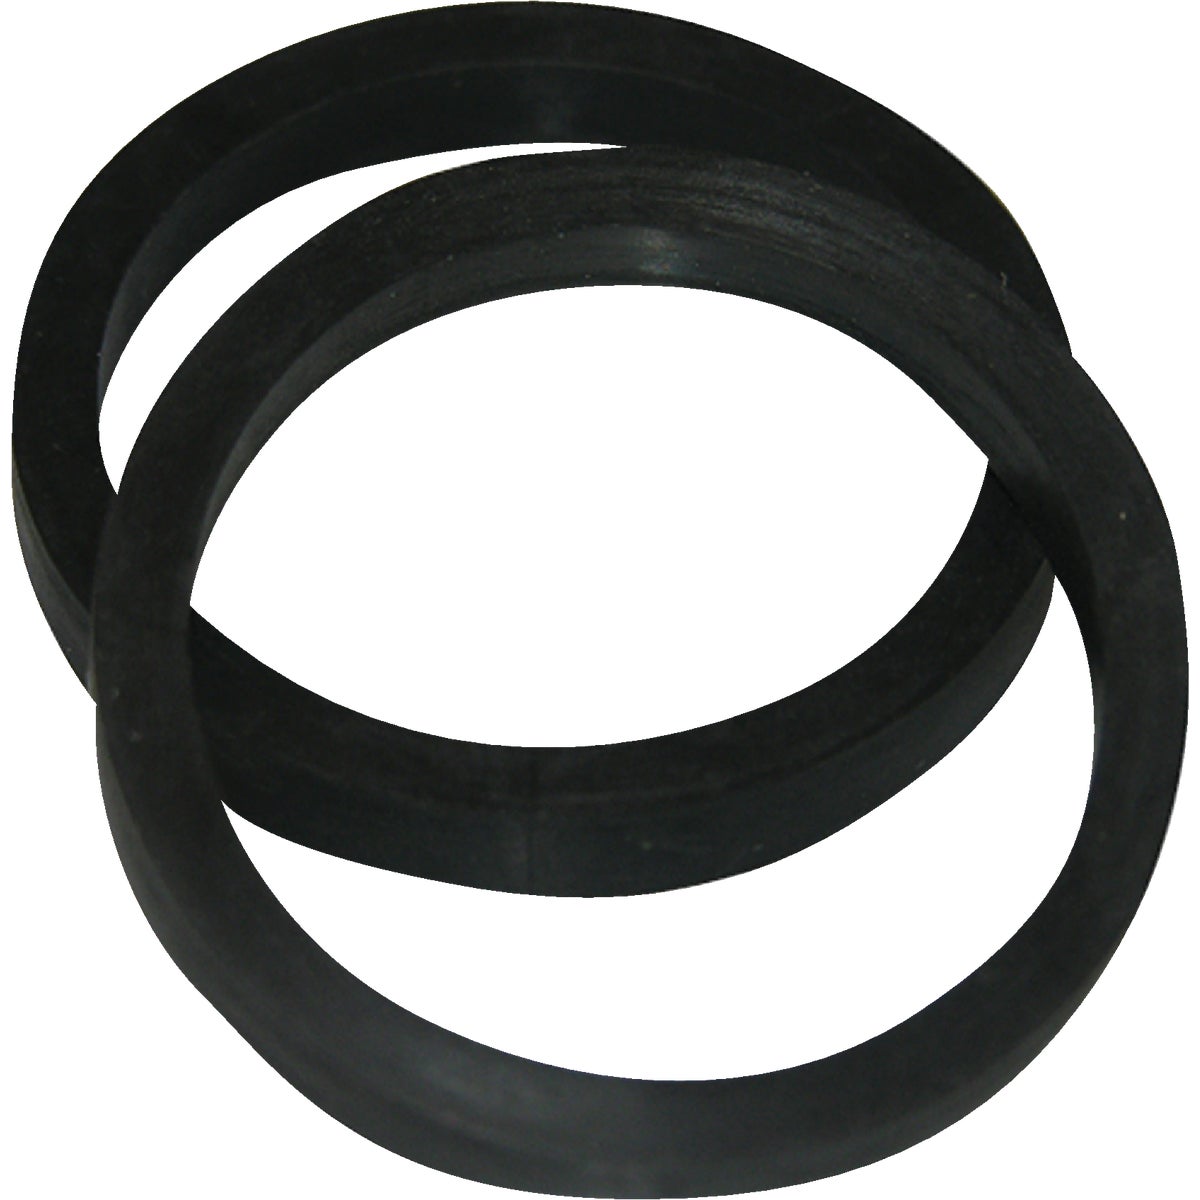 Lasco 1-1/4 In. Black Rubber Slip Joint Washer (2-Pack)